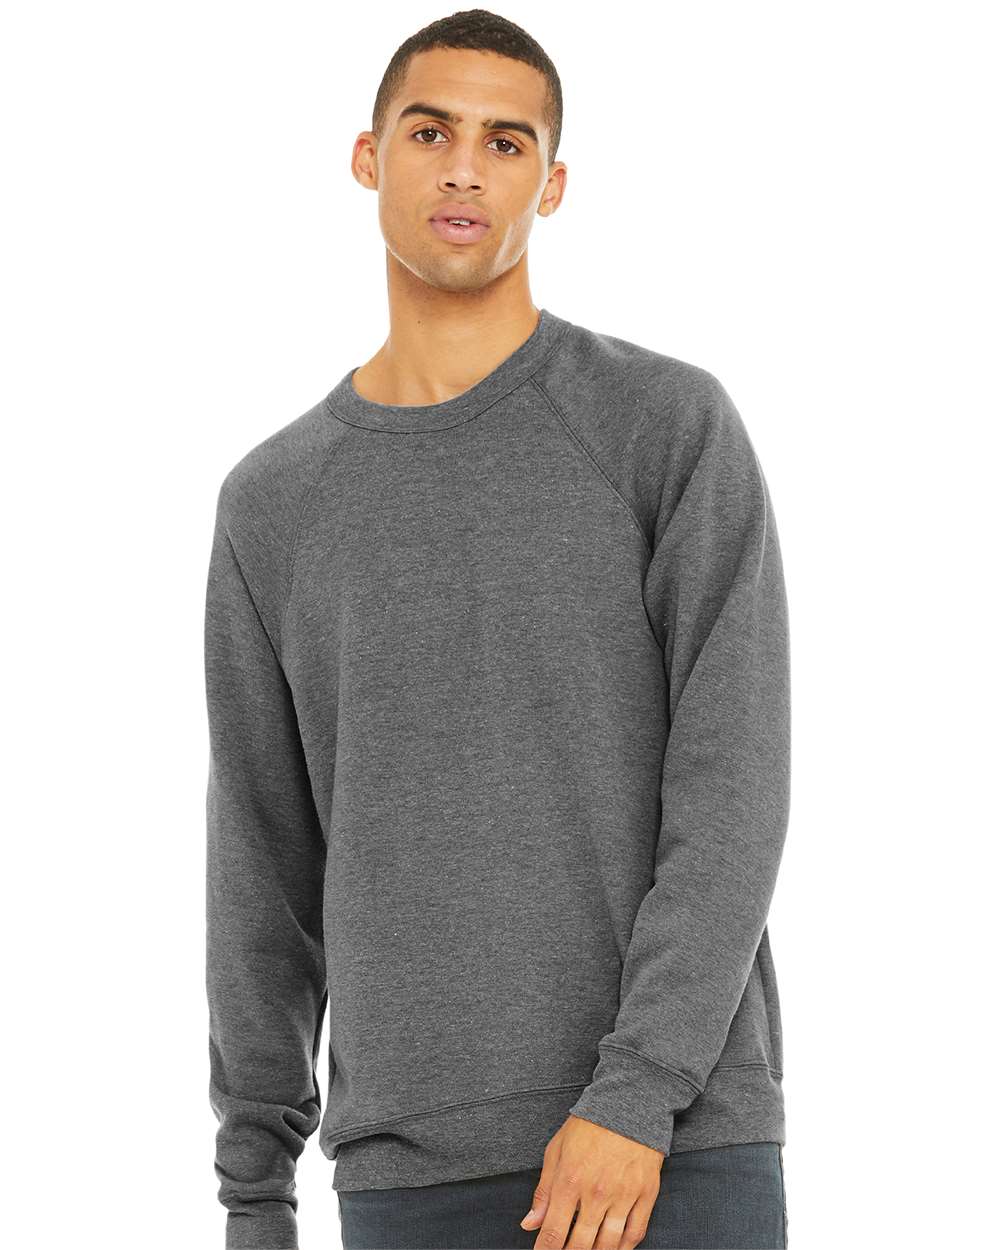 Bella + Canvas Fleece Crewneck Sweatshirt Size Medium - Large